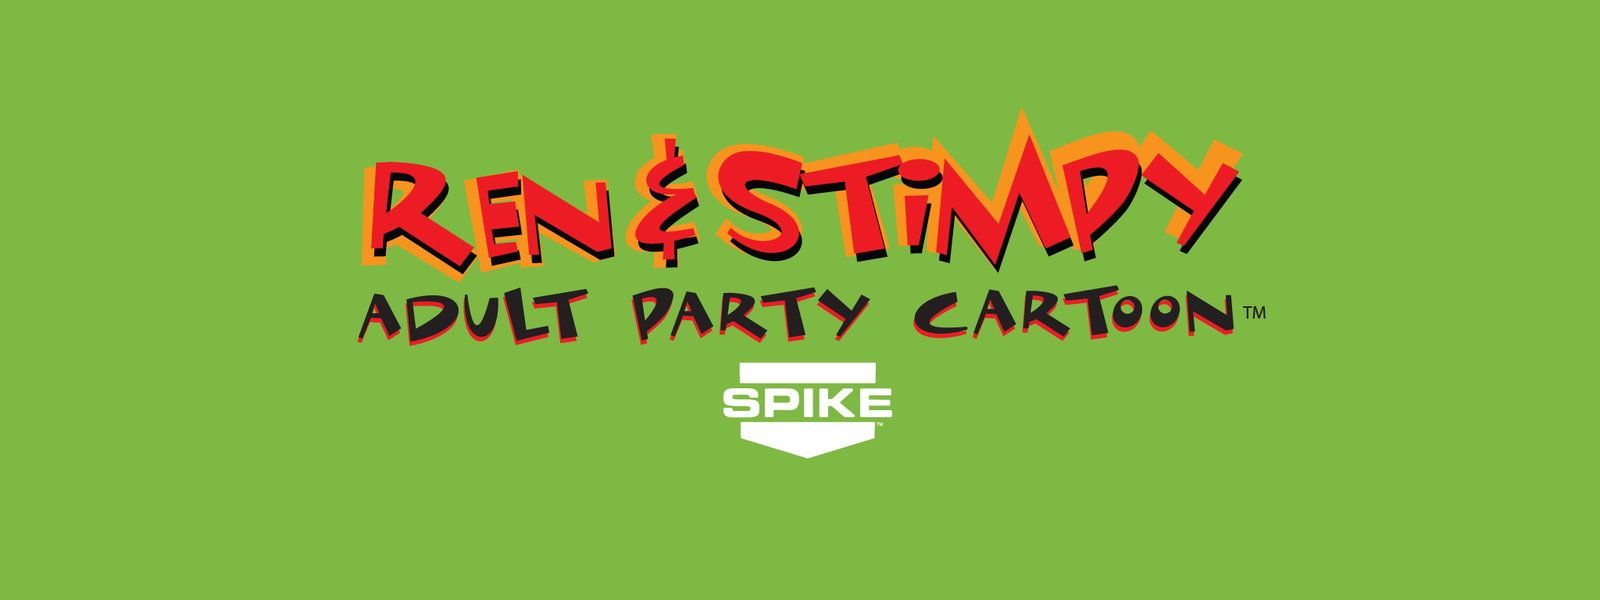 15 Things About Ren & Stimpy Nickelodeon Keeps Secret